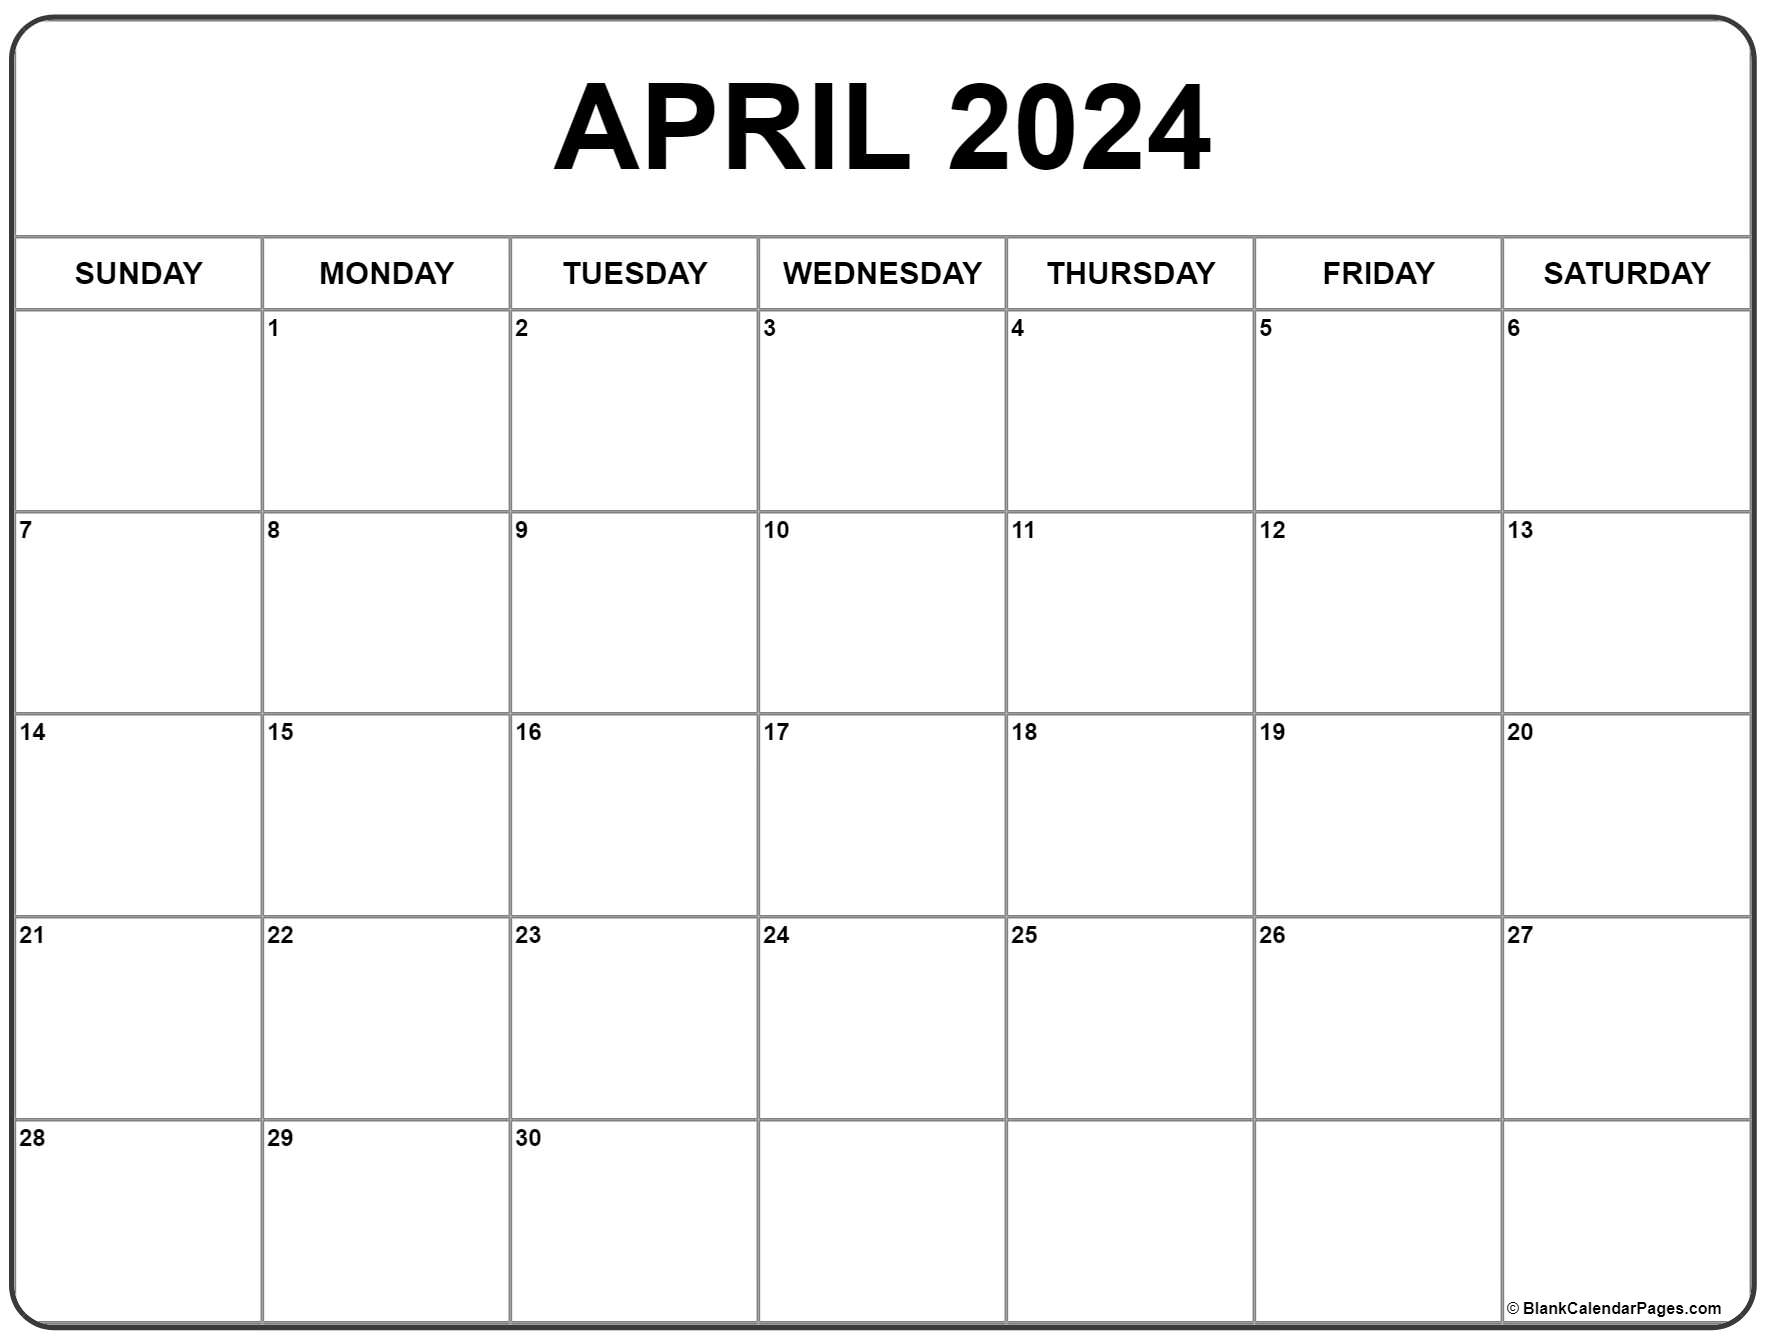 April 2024 Calendar | Free Printable Calendar | Free Printable Calendar 2024 April